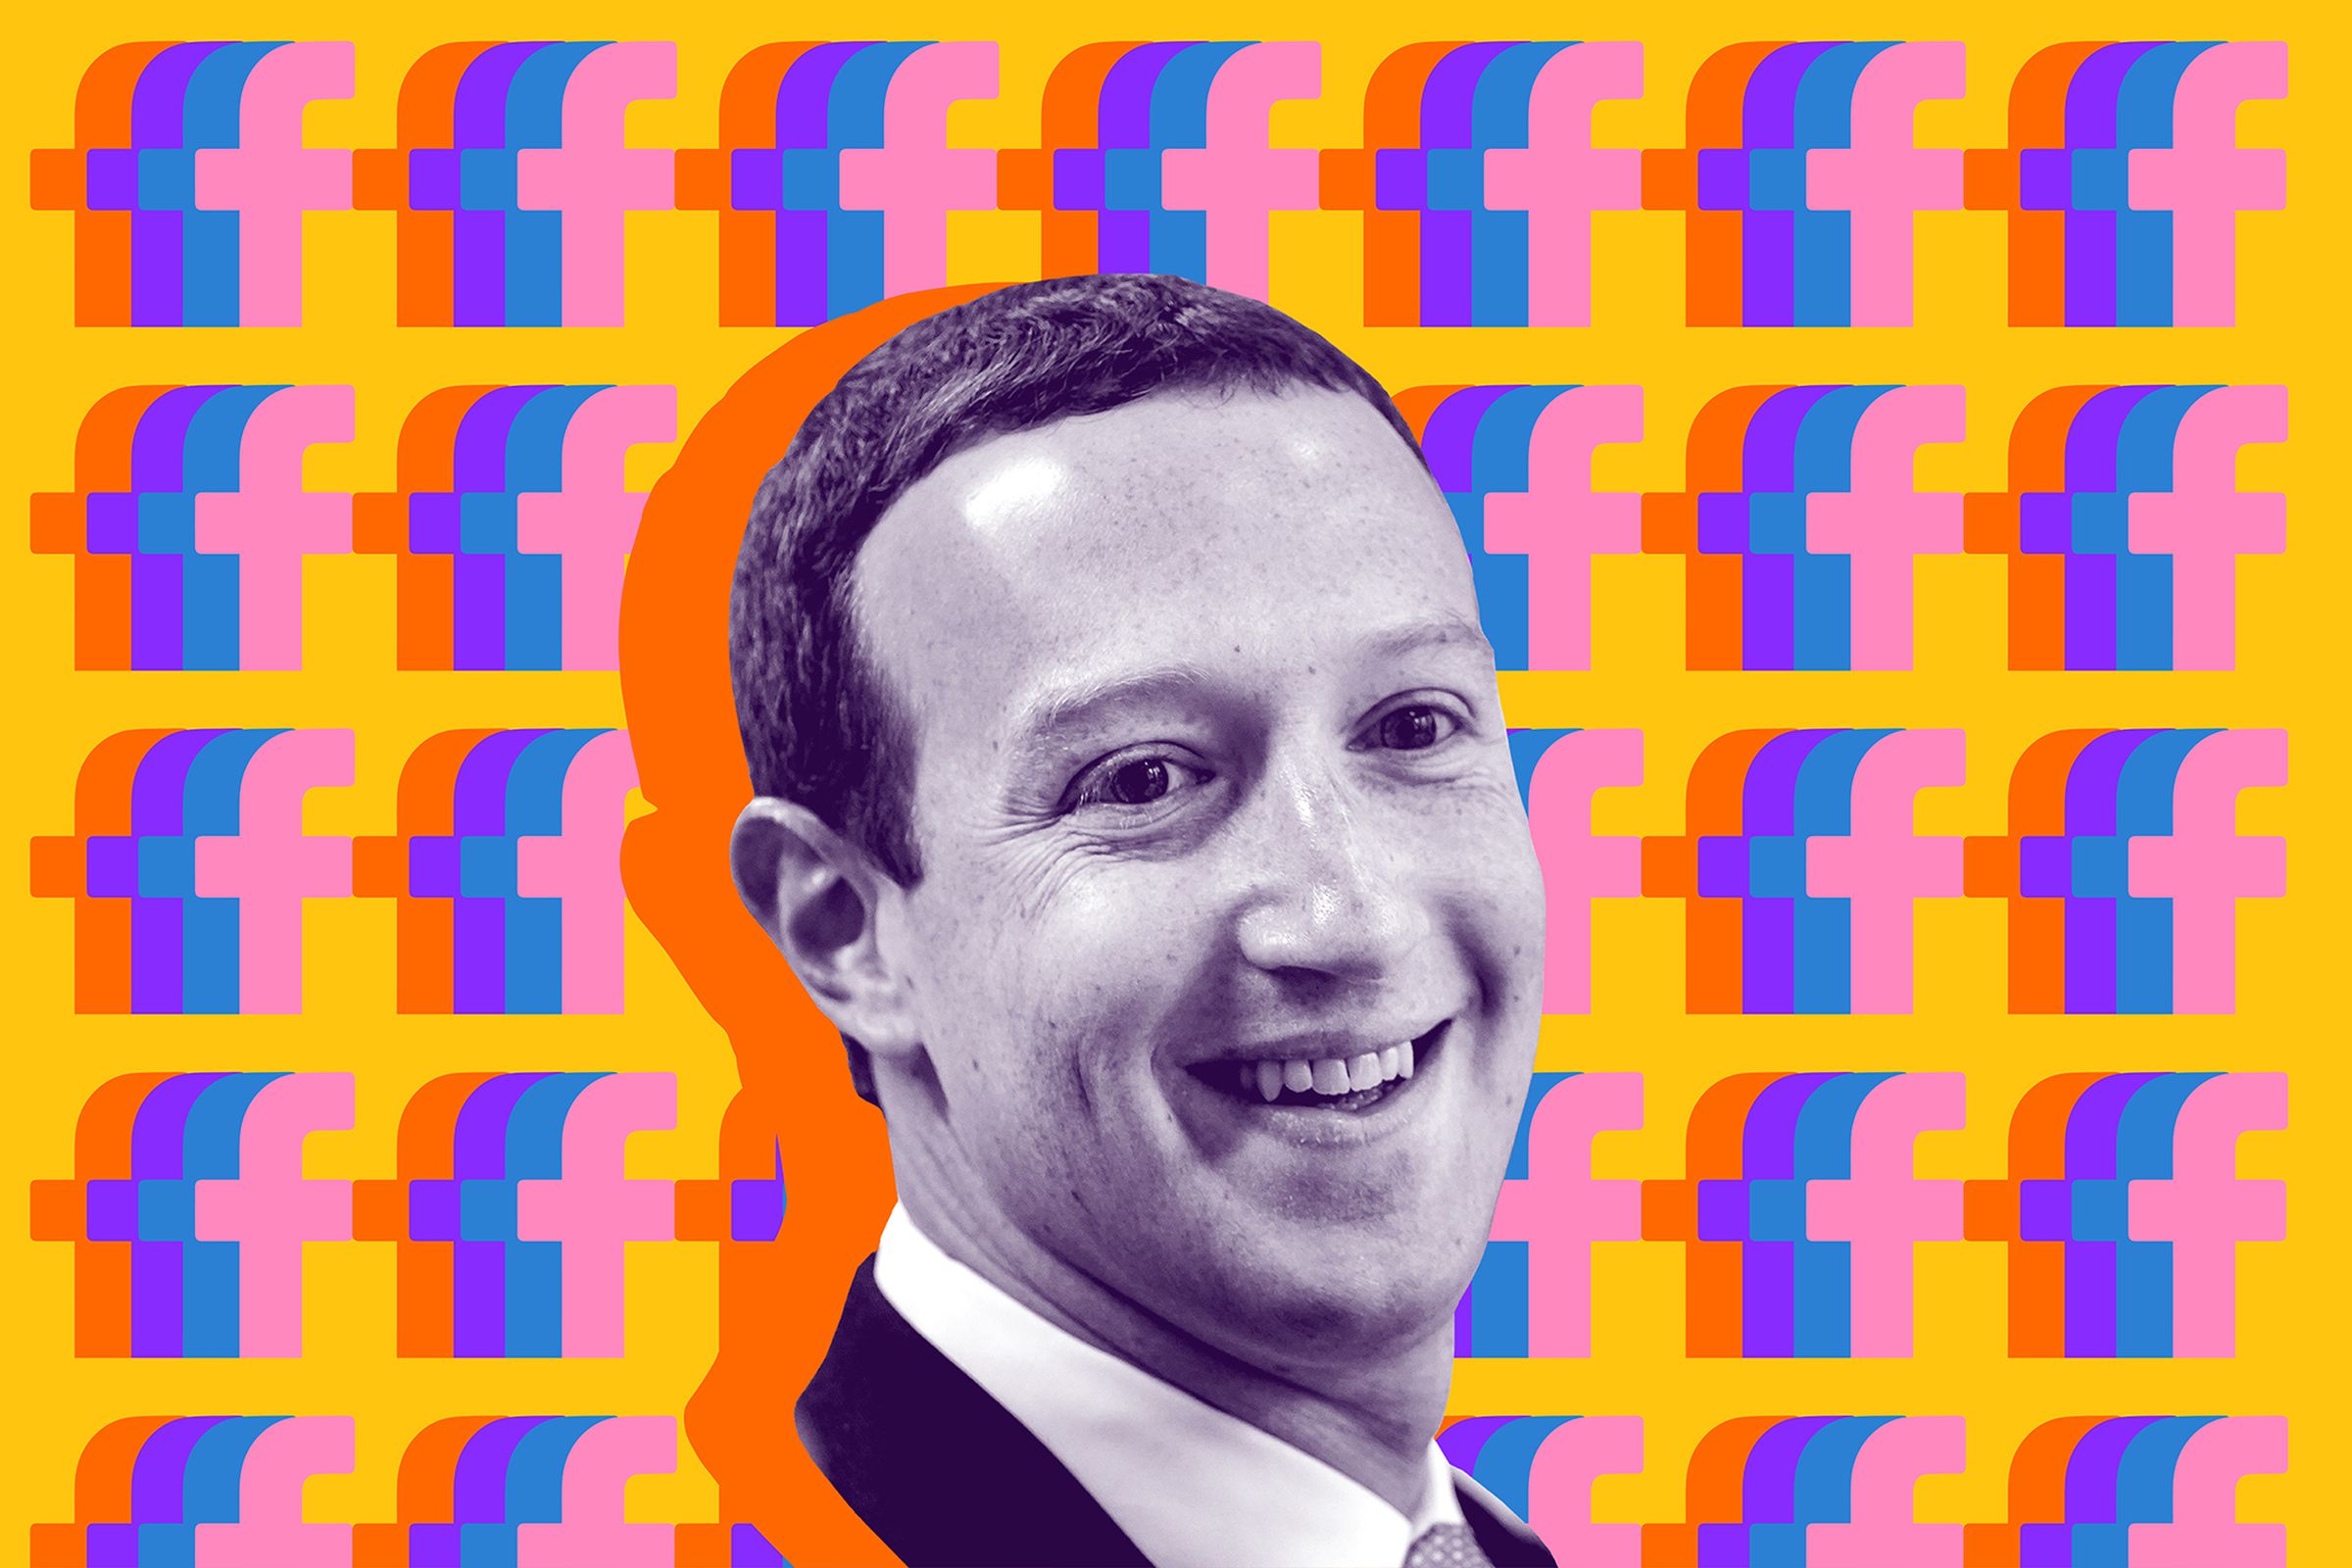 An image showing Mark Zuckerberg